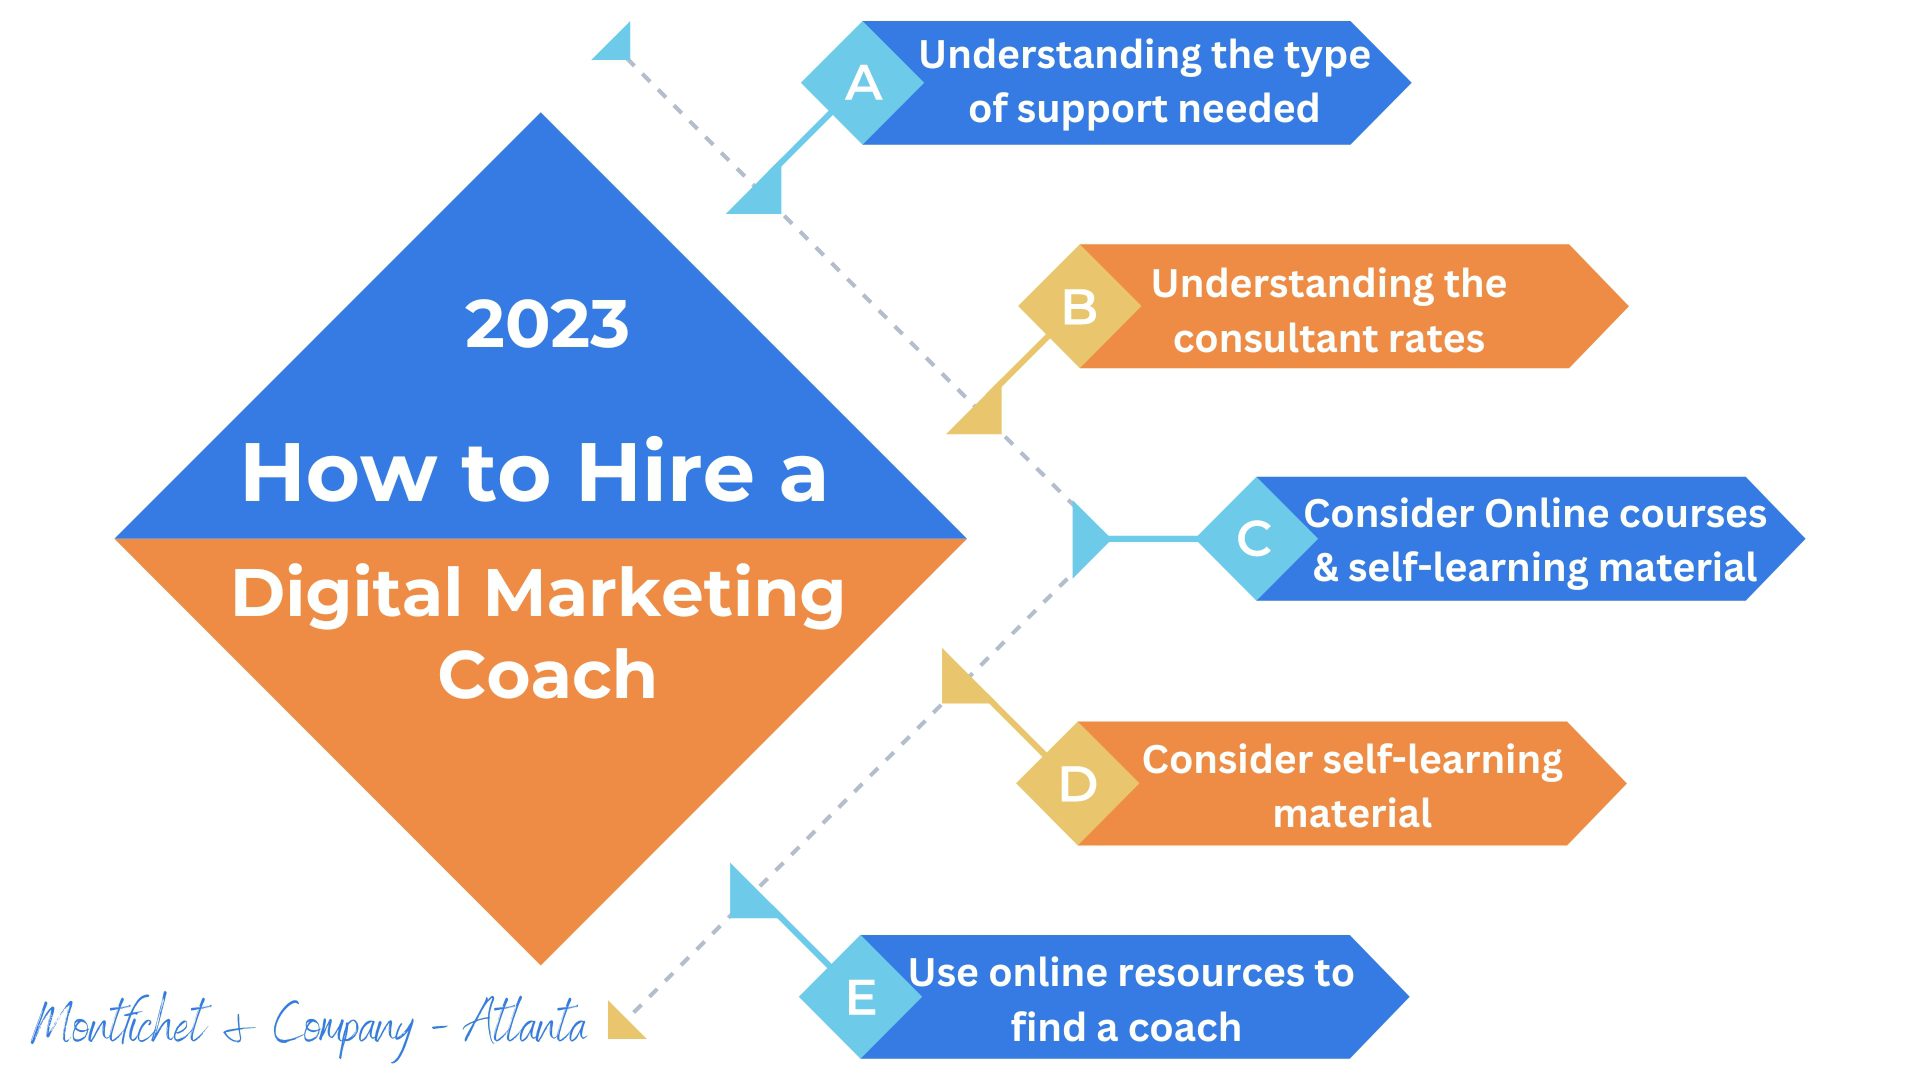 Hiring a Digital Marketing Coach 2023